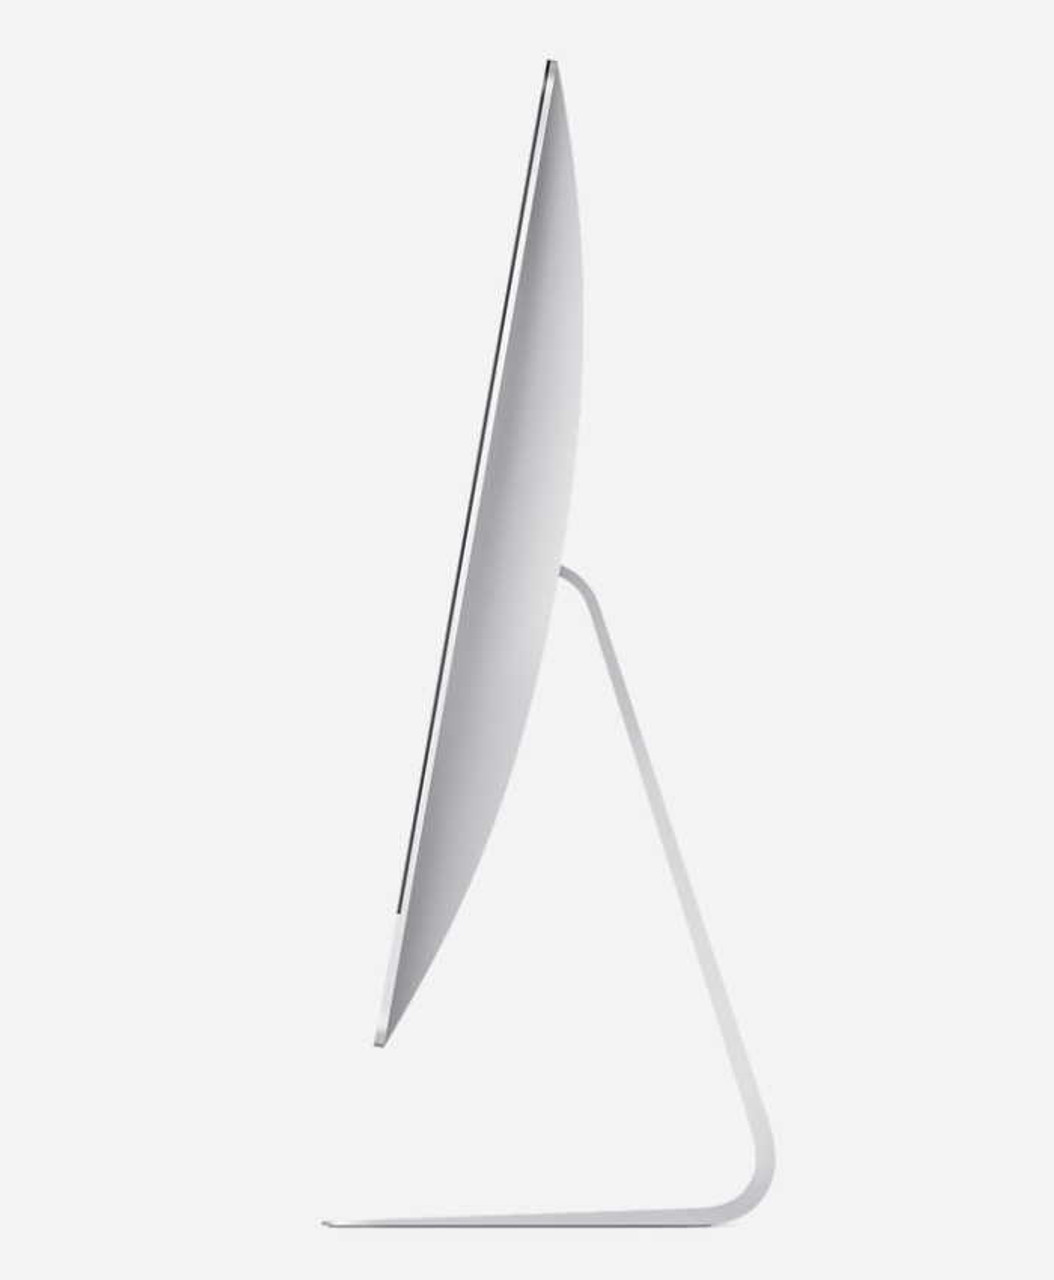 Used Apple iMac 27-inch (Retina 5K) 3.1GHZ 6-Core i5 (2020 